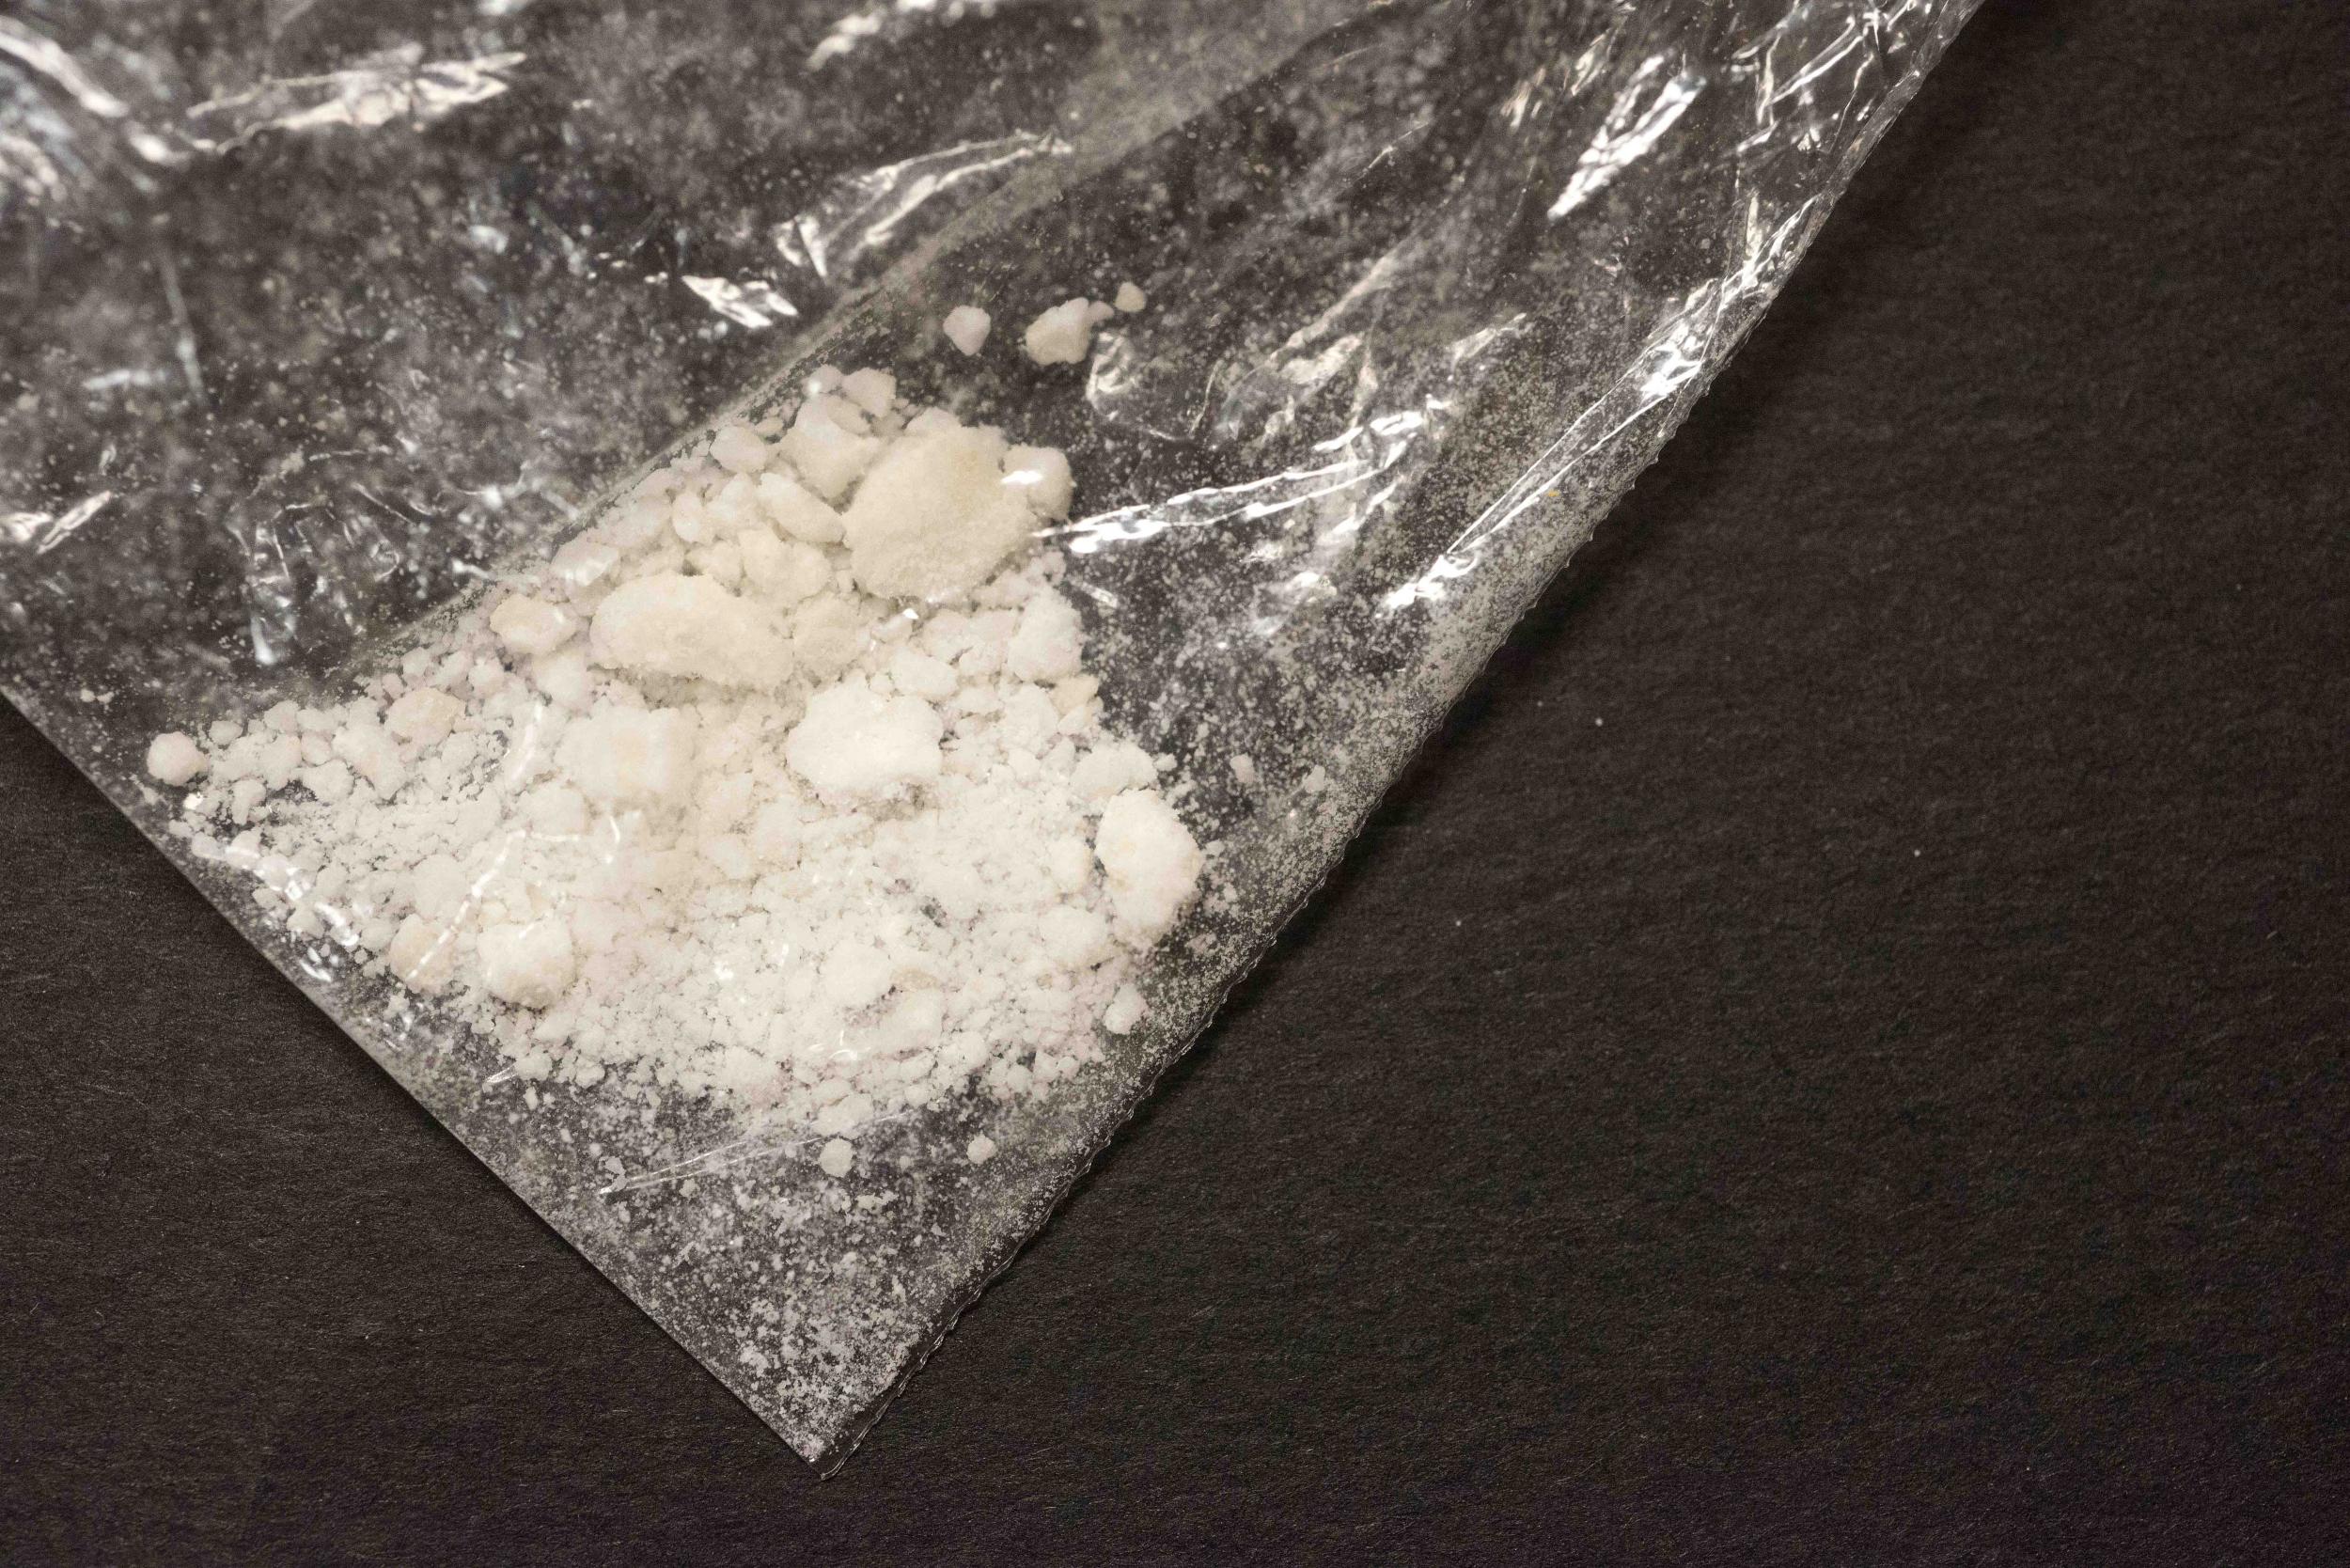 Ohio police chief James Hughes &apos;overdoses on drugs taken from evidence room&apos;